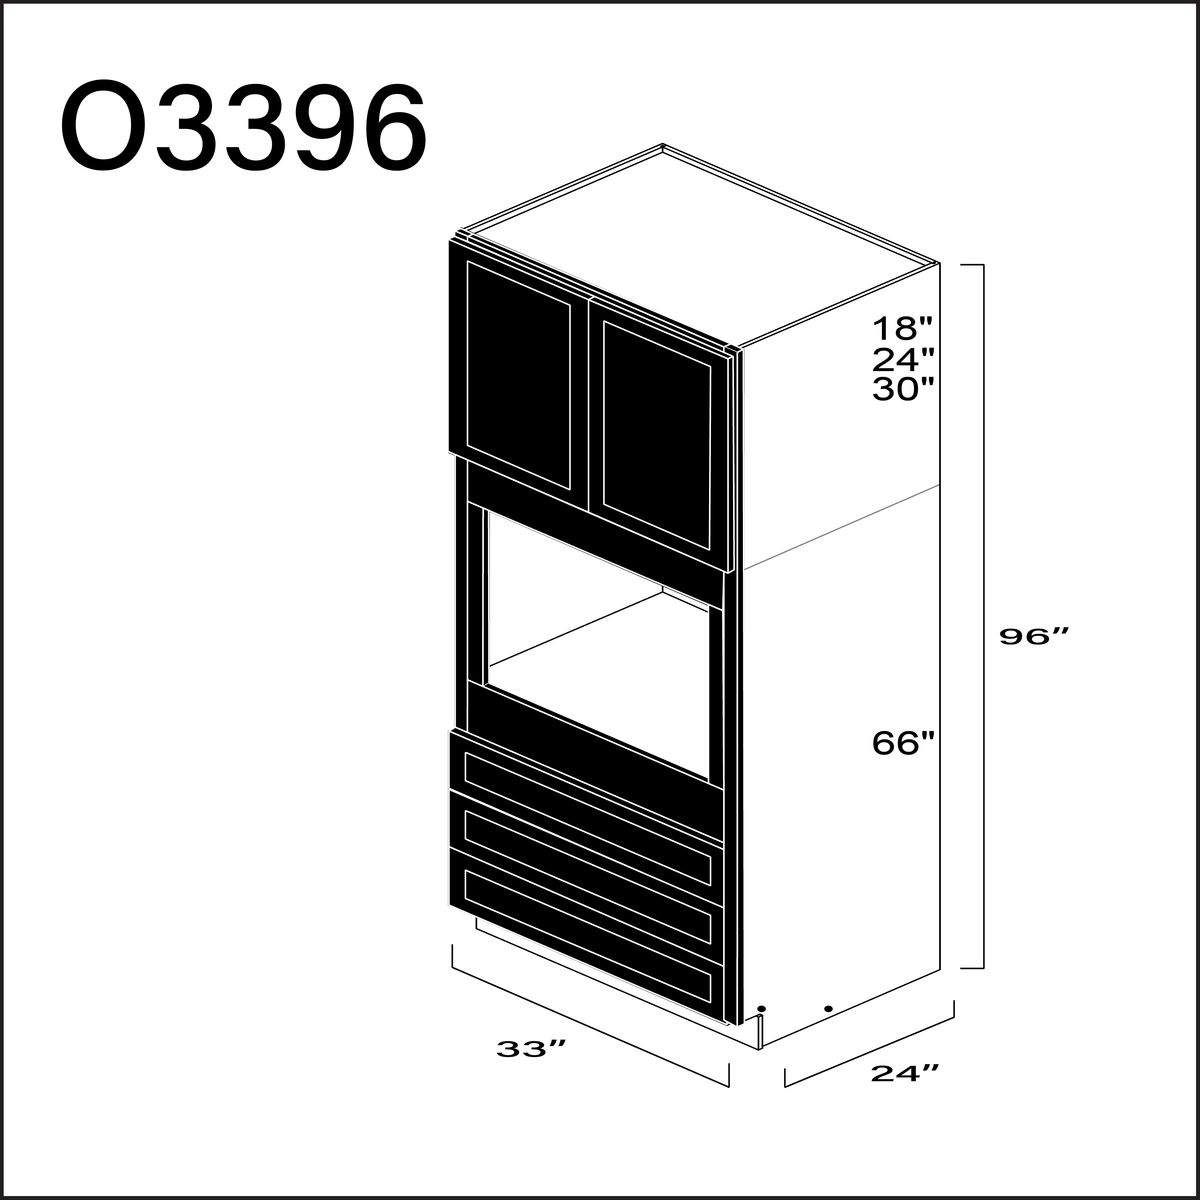 Black Shaker Single Oven Cabinet - 33" W x 96" H x 24" D